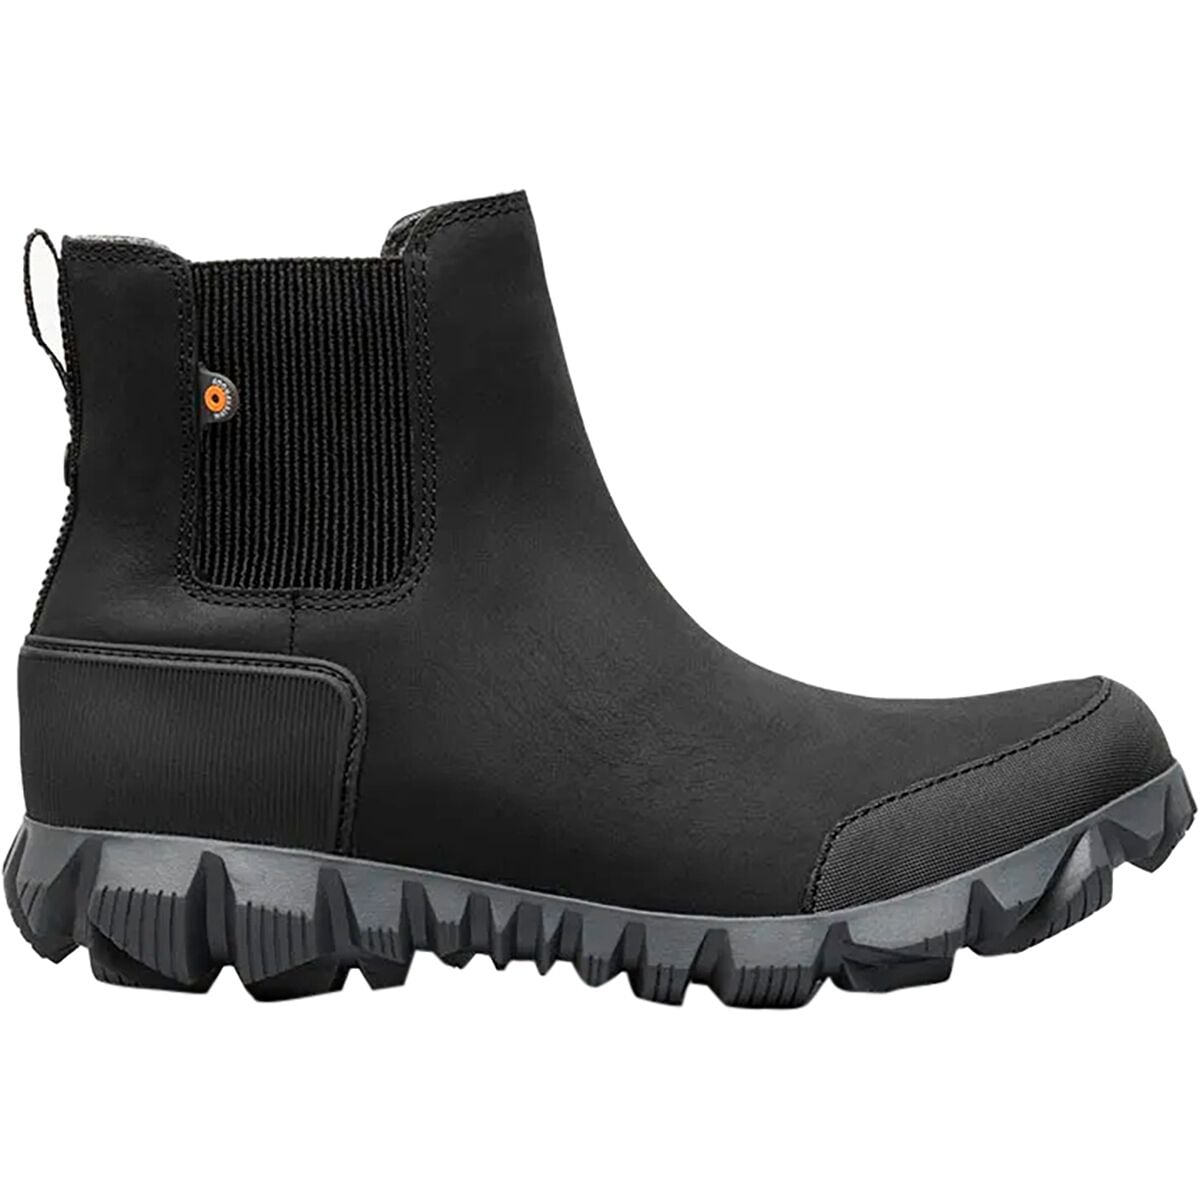 Bogs Arcata Urban Leather Chelsea Boot - Women's